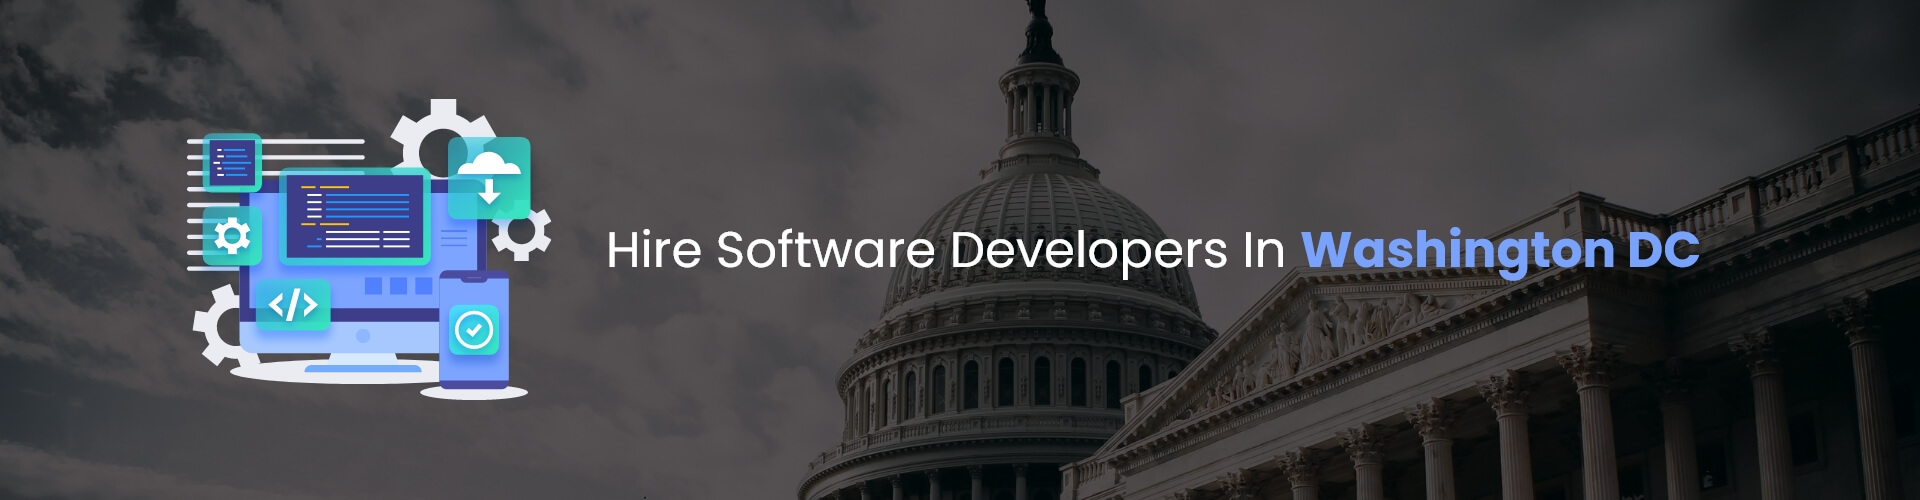 hire software developers washington dc